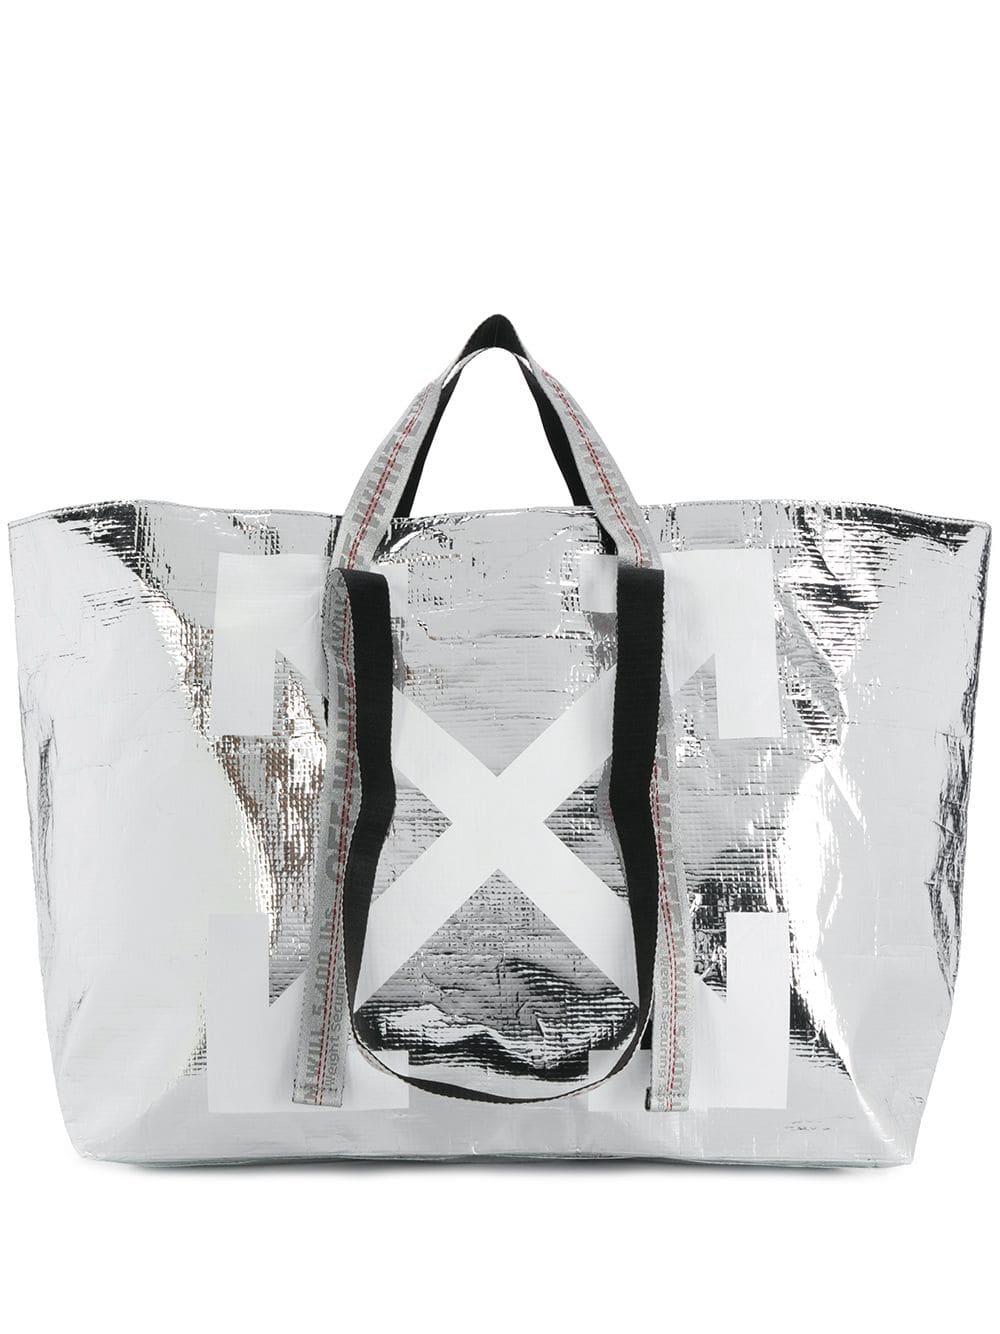 Off-White Commercial Tote Bag Metallic Silver Small - Allu USA